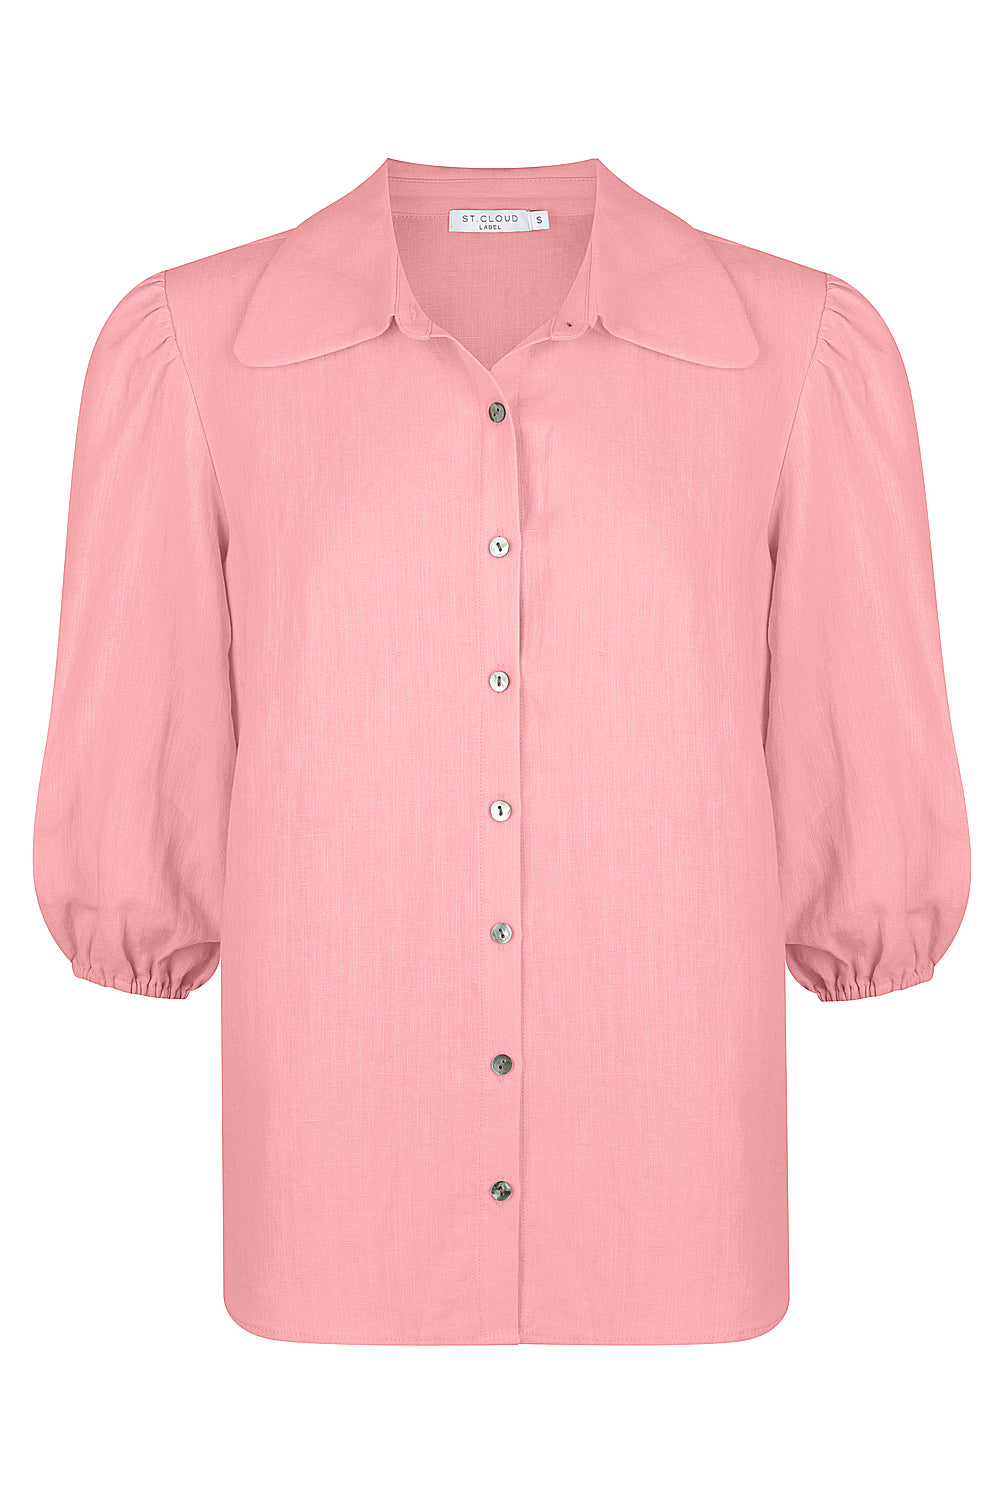 Cyan Linen Puff Sleeve Shirt - Georgia Peach